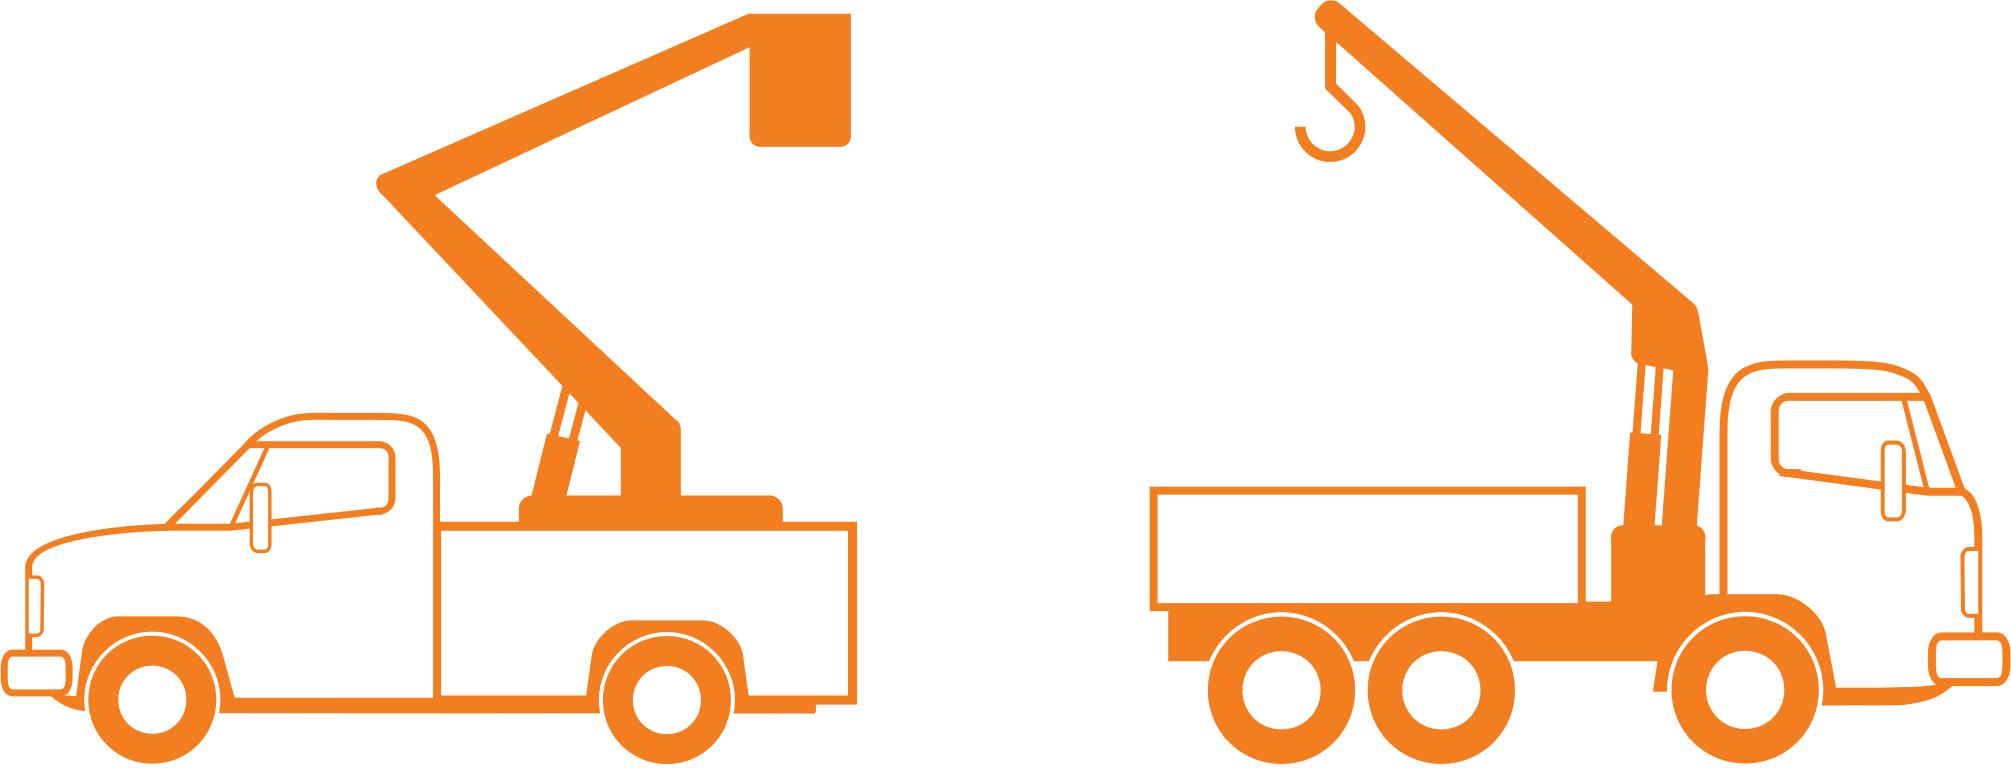 Lift and Crane Trucks PNG icons